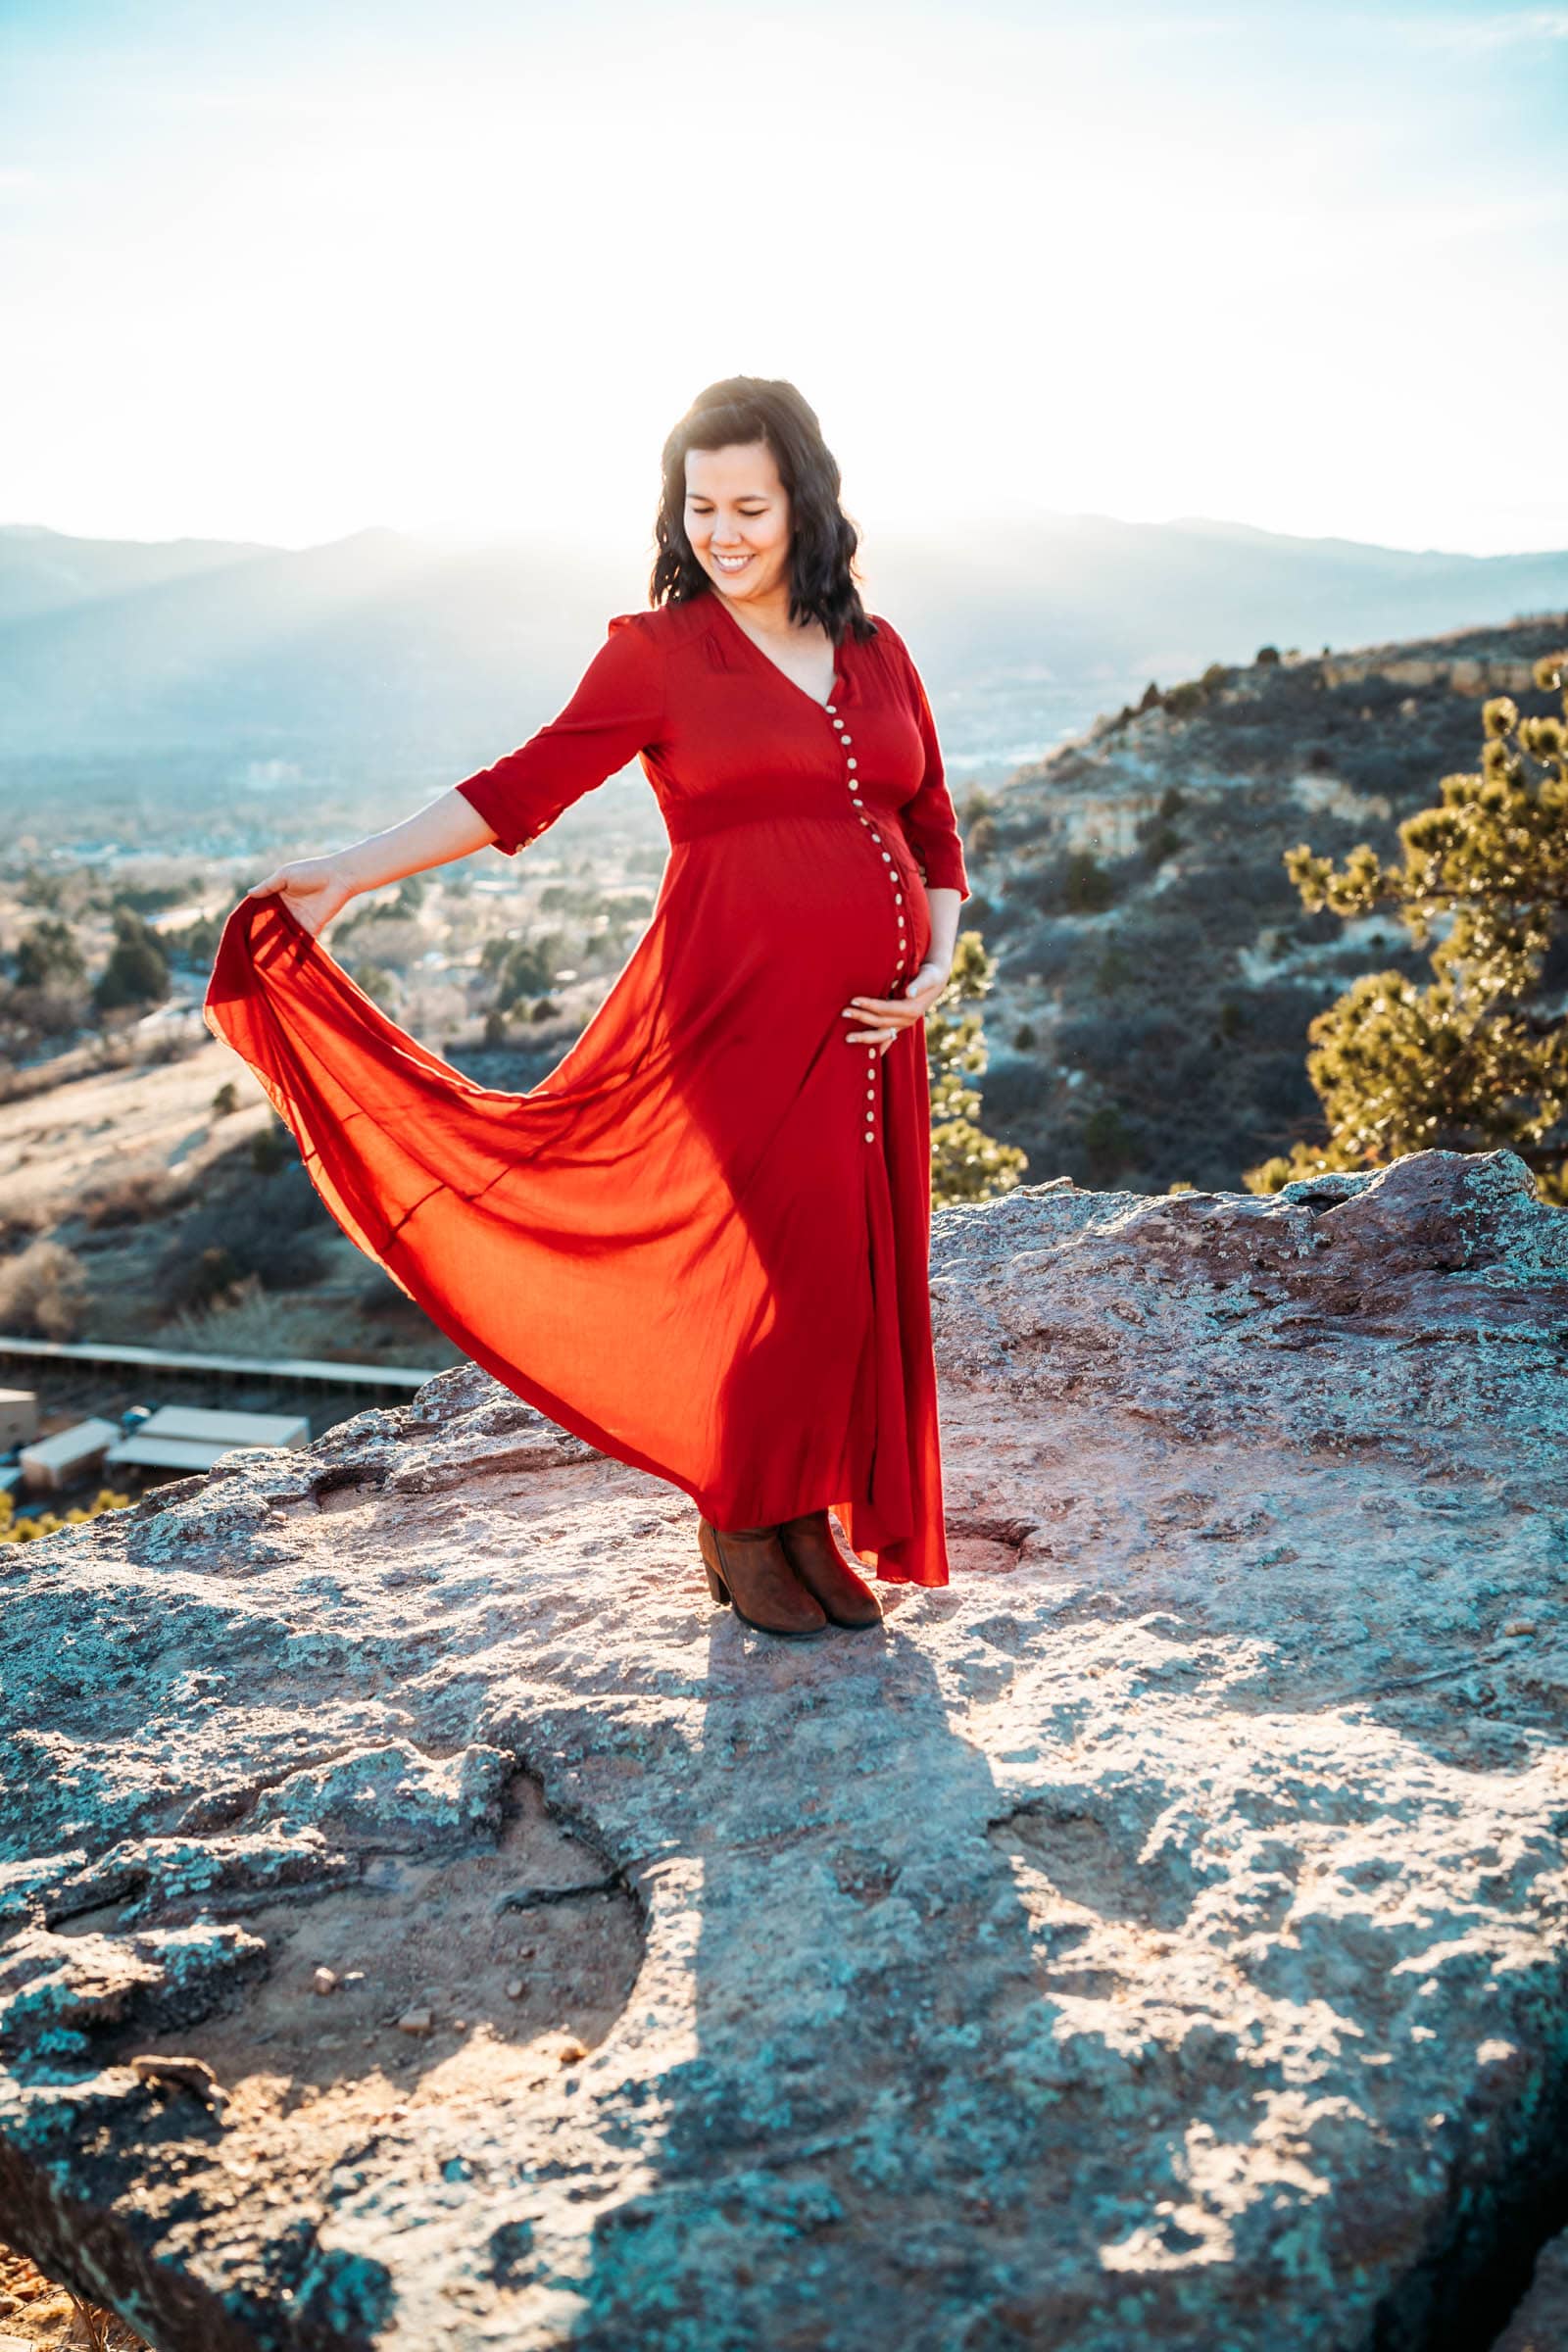 Colorado Springs Maternity Photographer